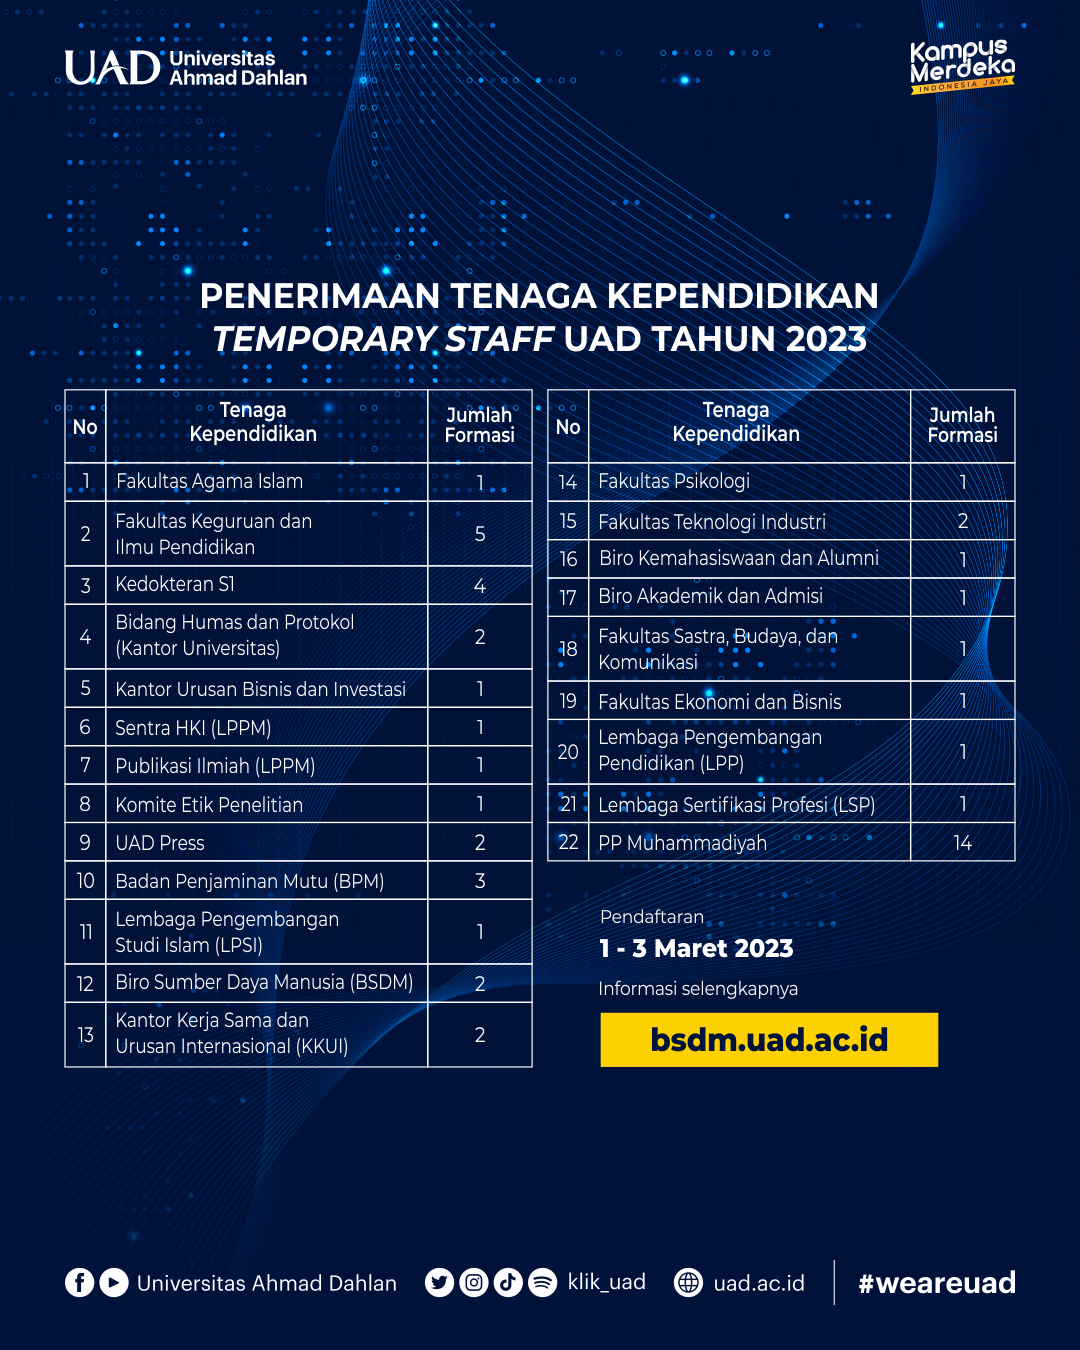 PENERIMAAN TENAGA KEPENDIDIKAN TEMPORARY STAFF UNIVERSITAS AHMAD DAHLAN TAHUN 2023